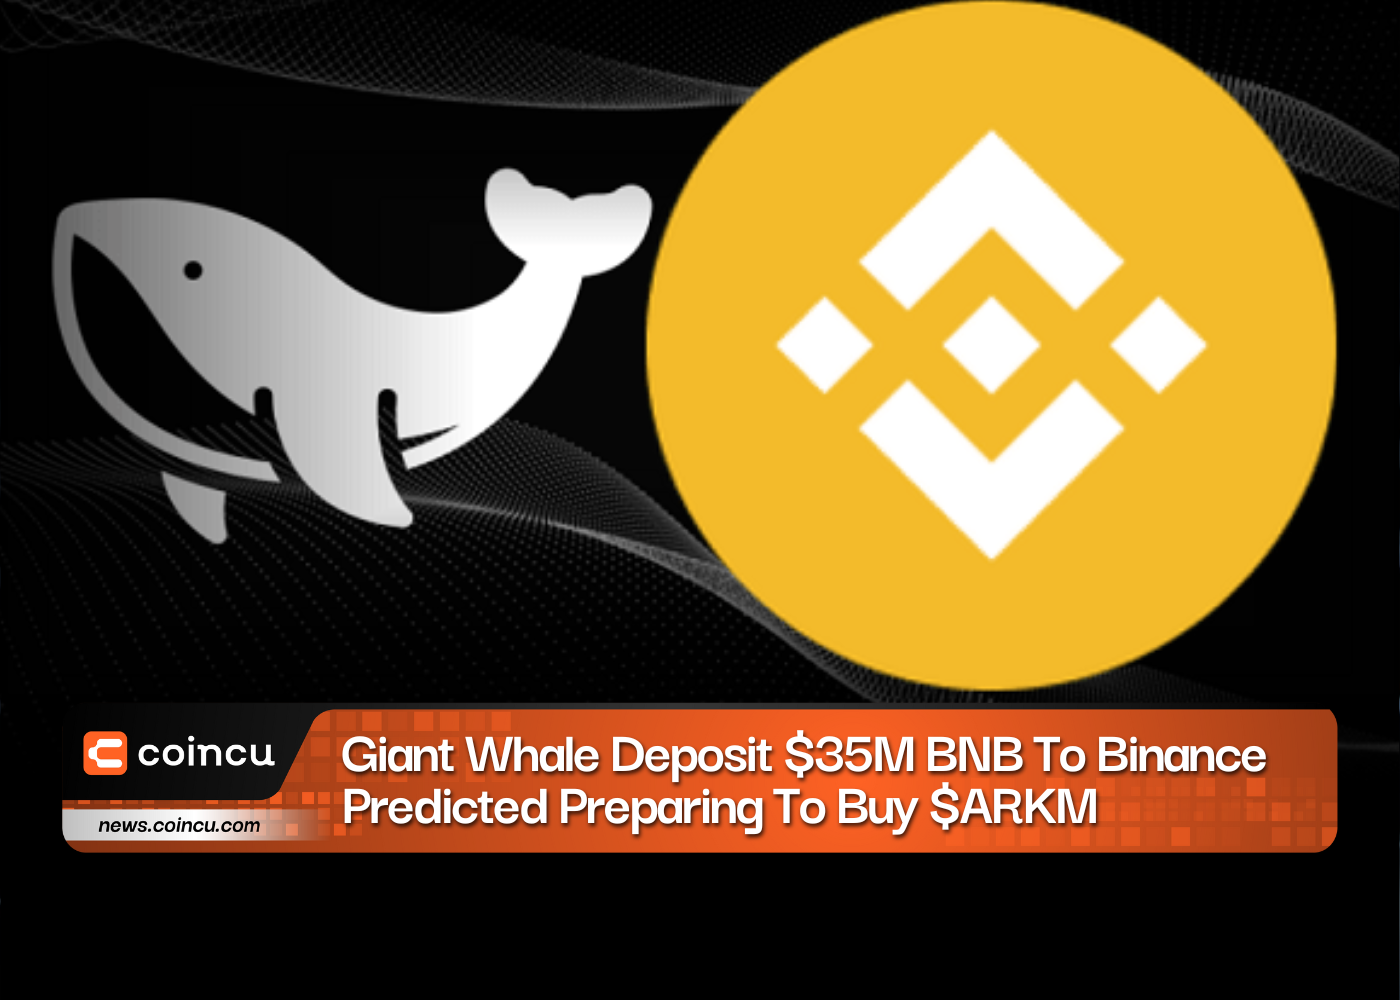 Giant Whale Deposit $35M BNB To Binance Predicted Preparing To Buy $ARKM